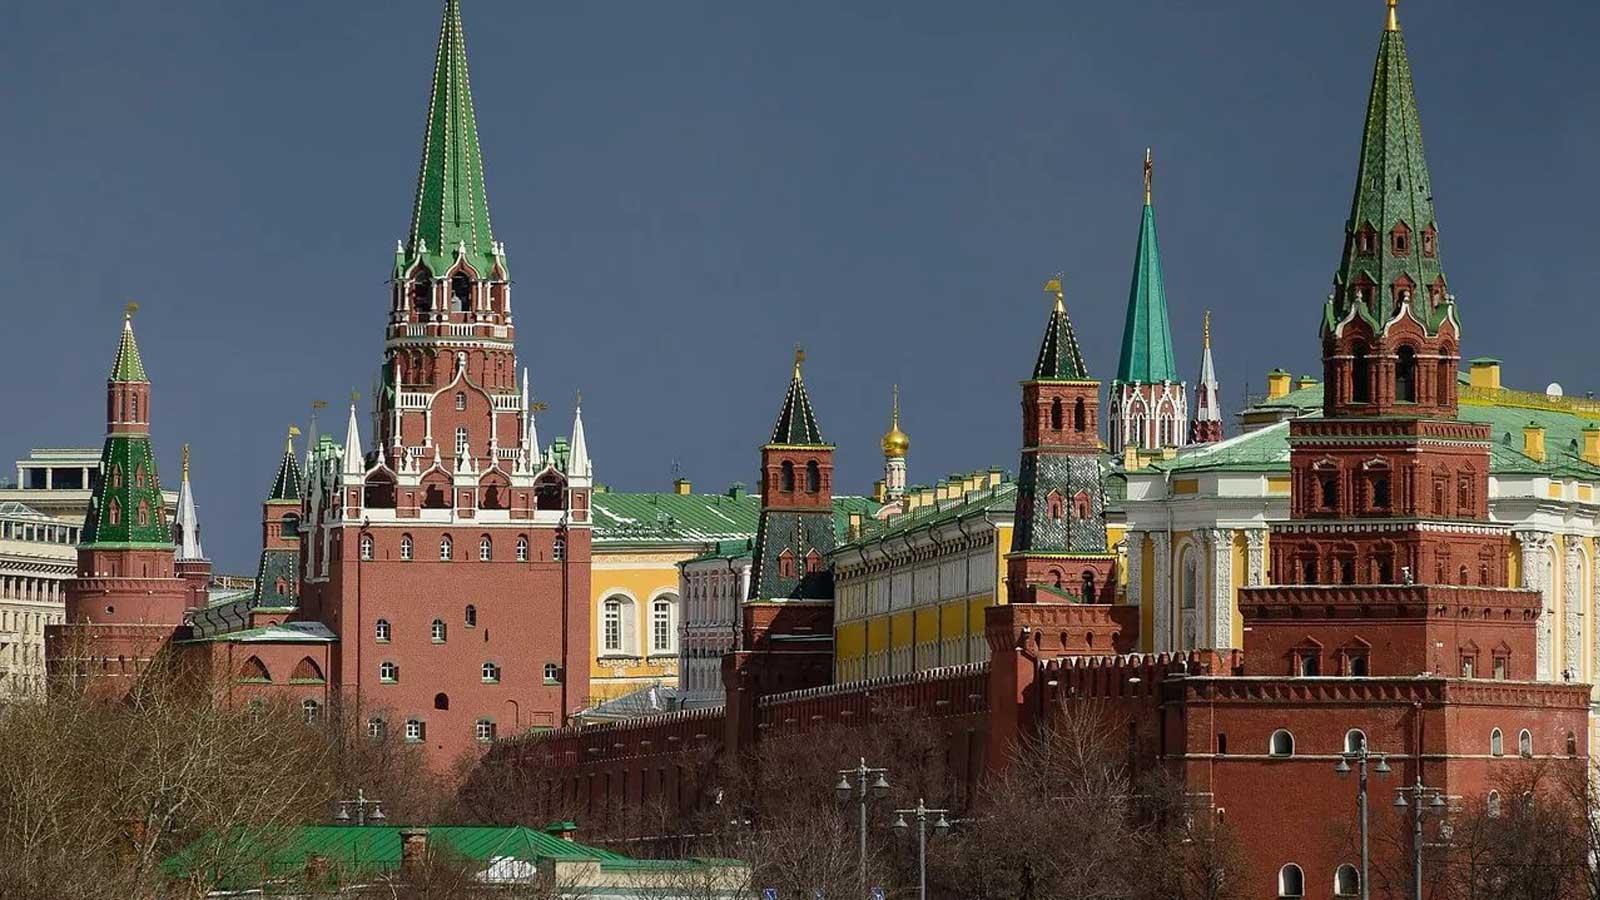 The world kremlin